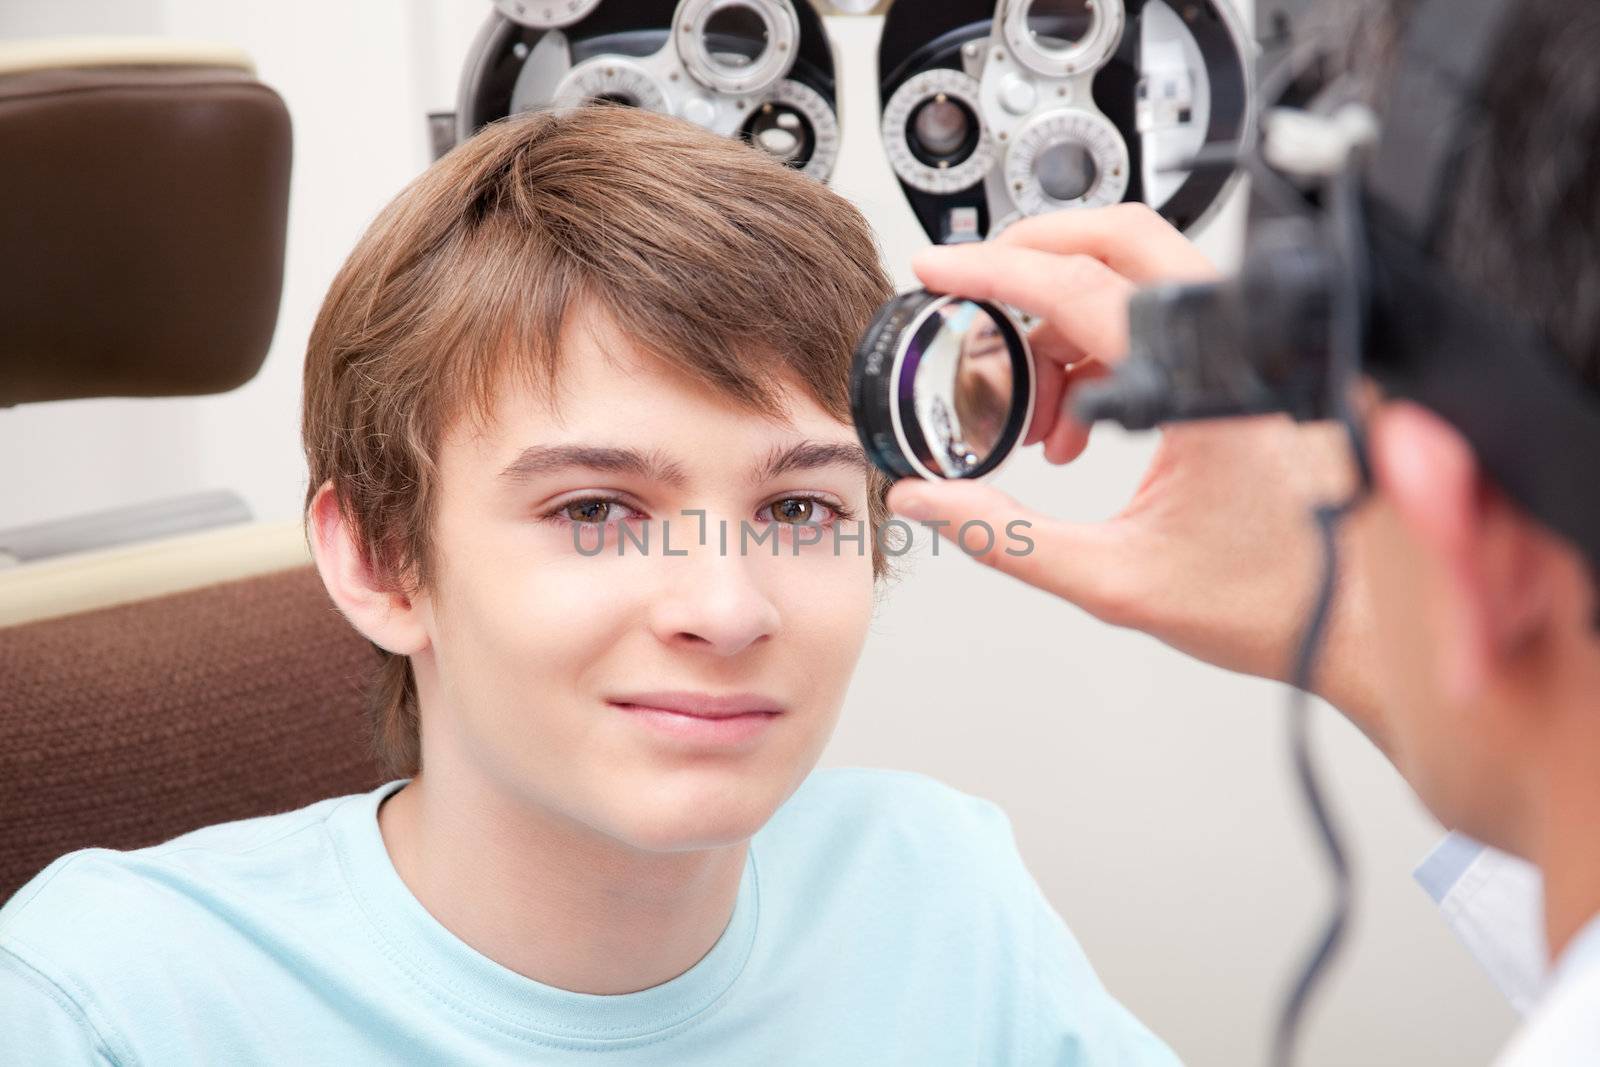 Optometrist taking an eyesight test examination.